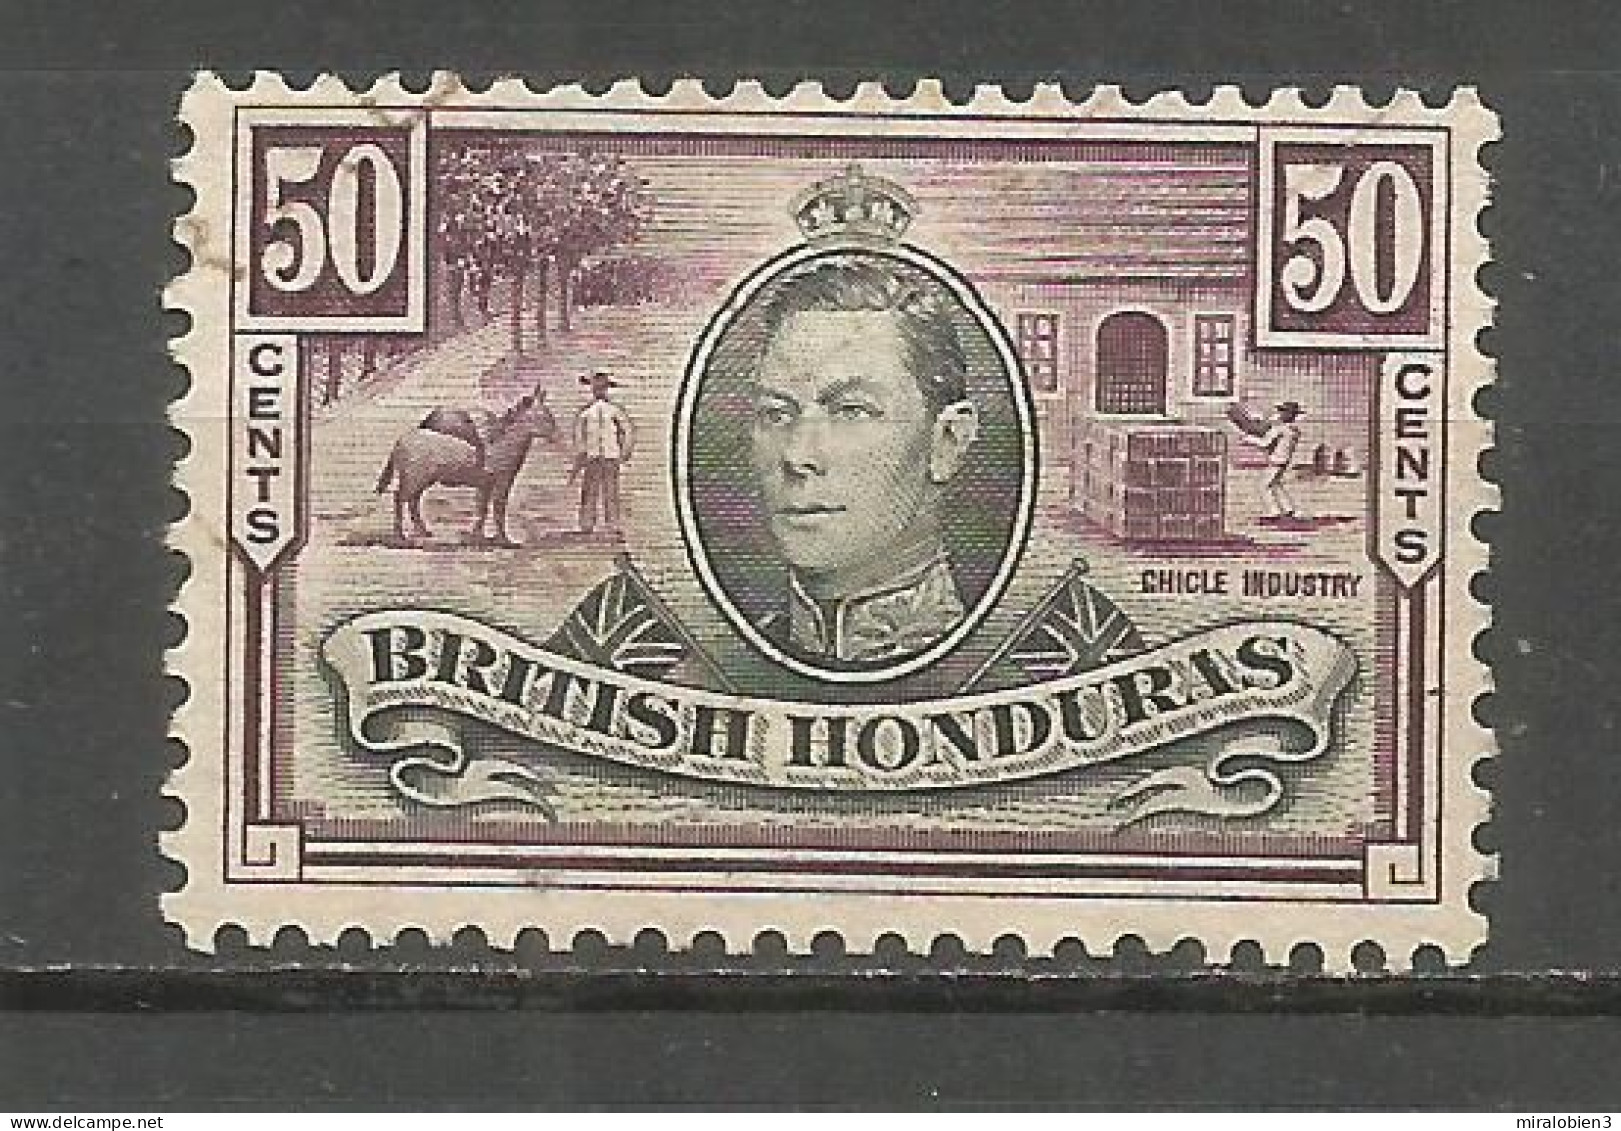 HONDURAS BRITANICA YVERT NUM. 126 USADO - Brits-Honduras (...-1970)